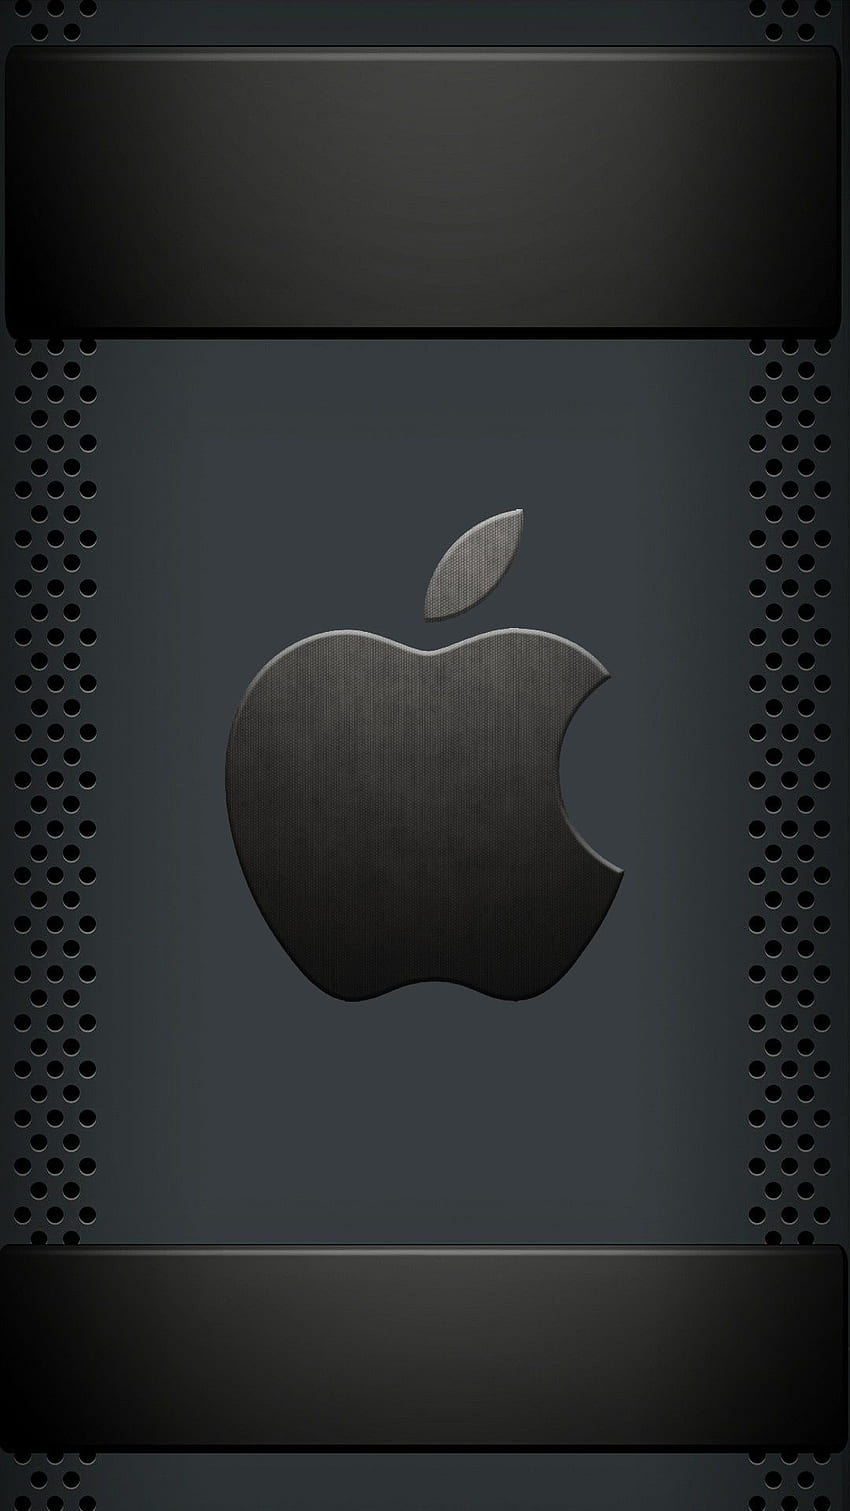 Genial logotipo de Apple iPhone X fondo de pantalla del teléfono